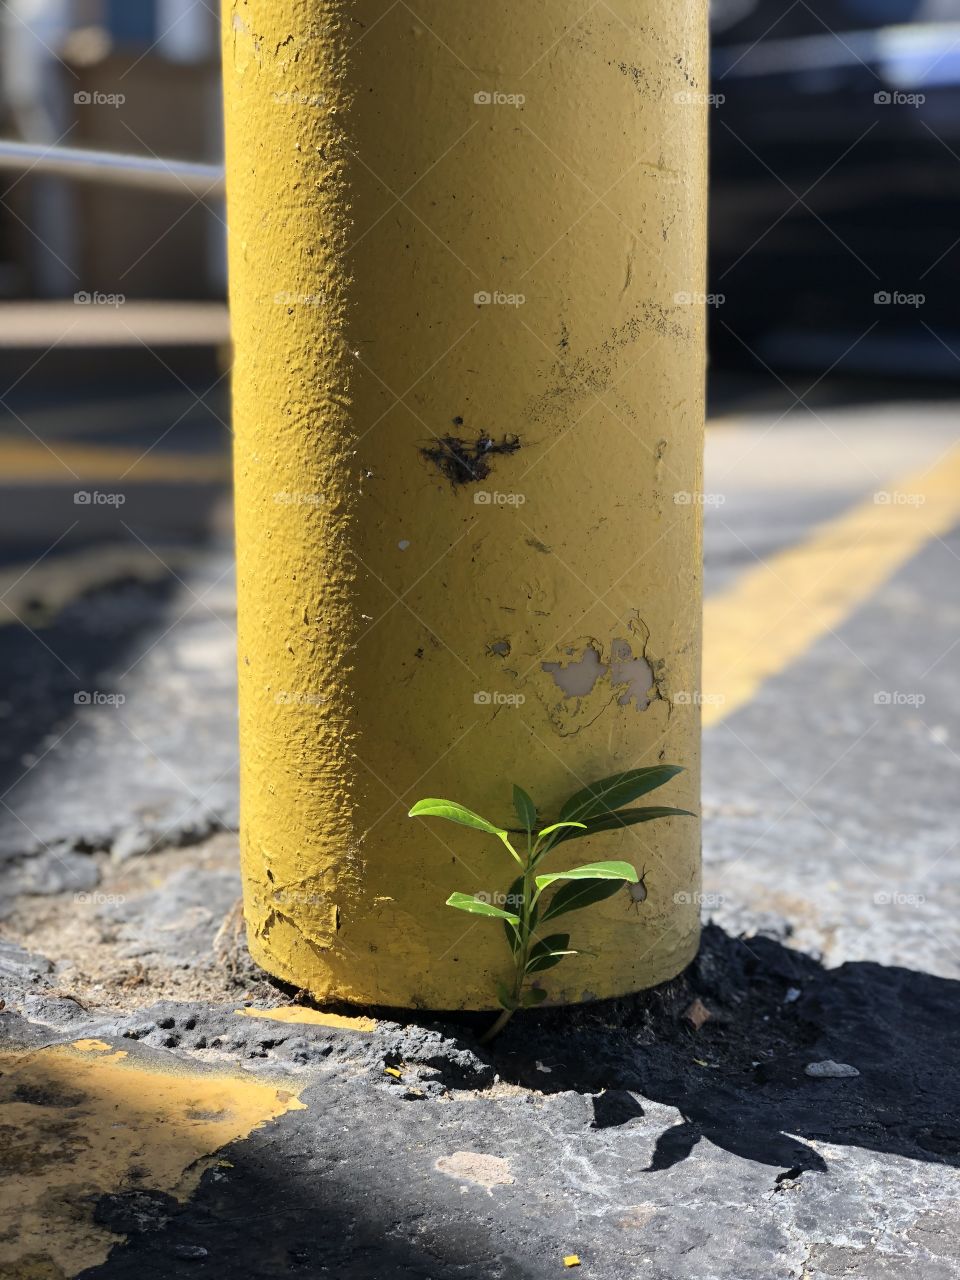 Life - tiny tree growing out of an asphalt parking lot